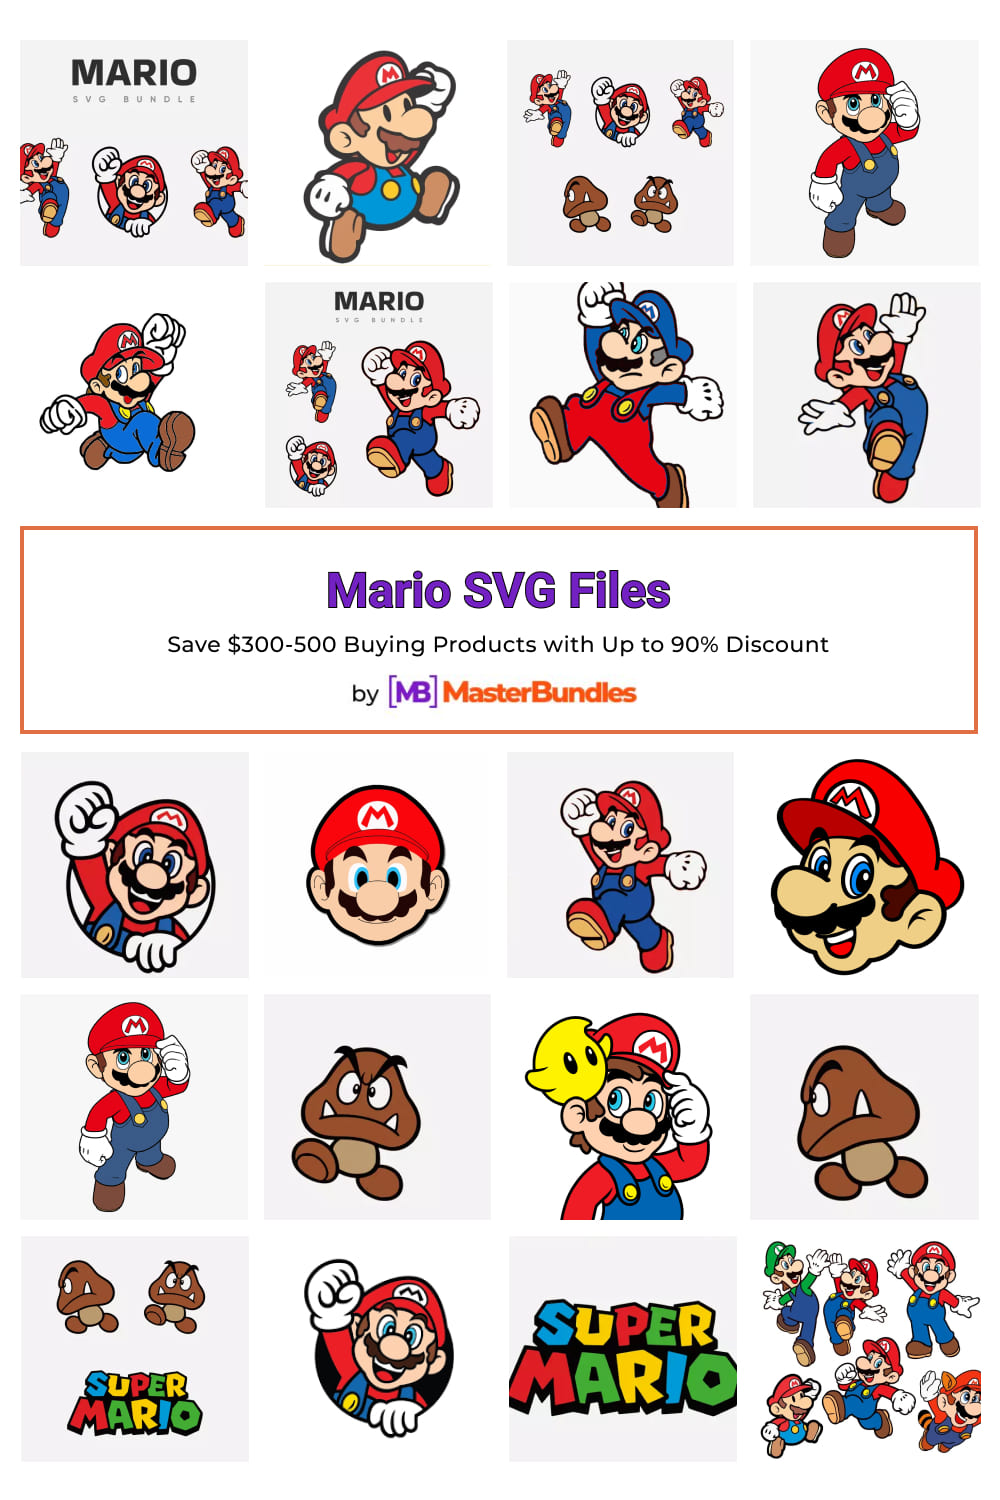 Mario SVG Files Pinterest image.